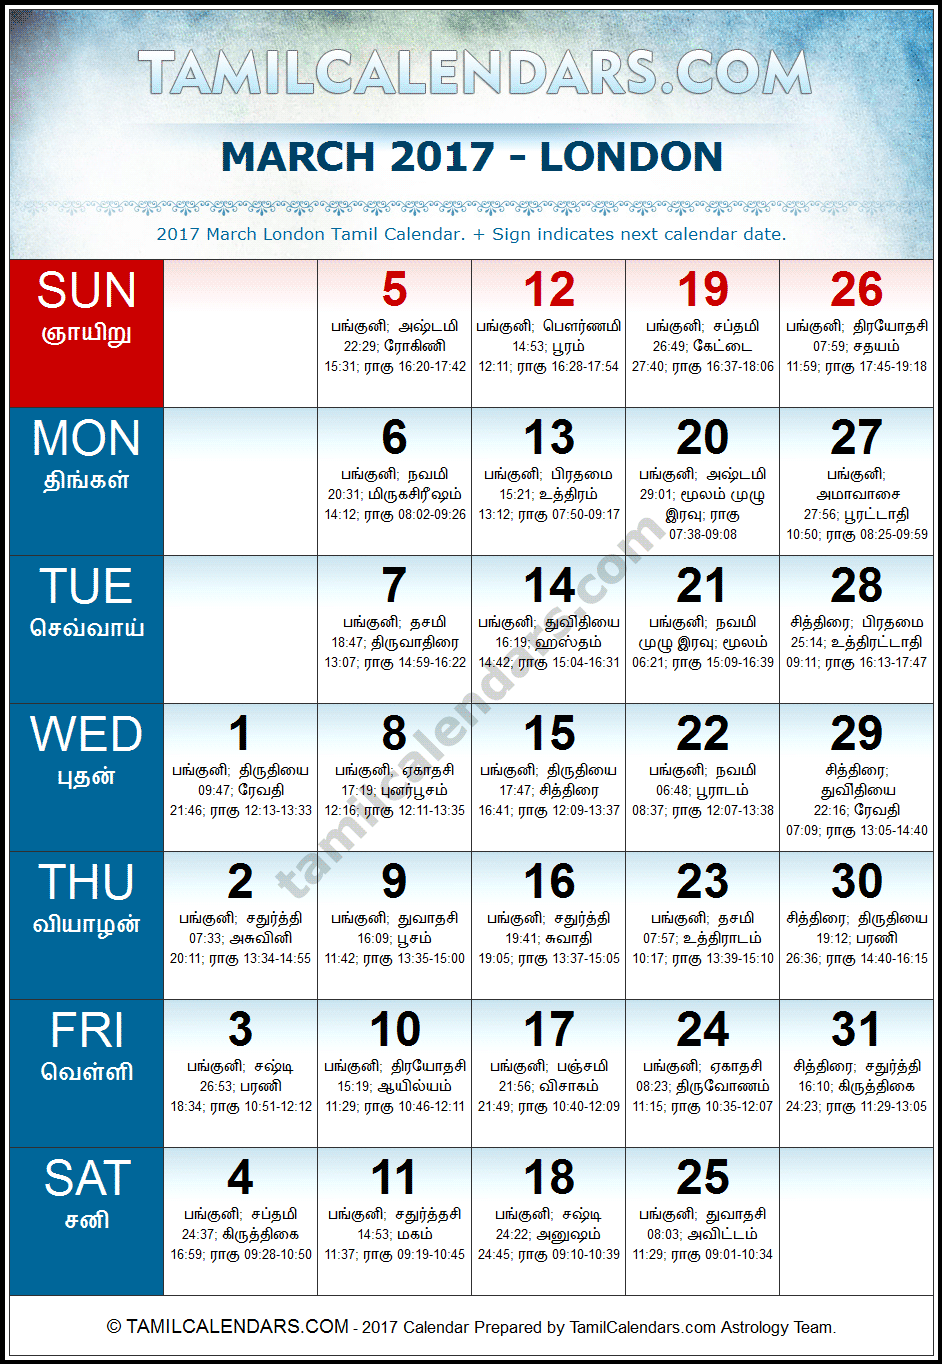 March 2017 Tamil Calendar for London, UK